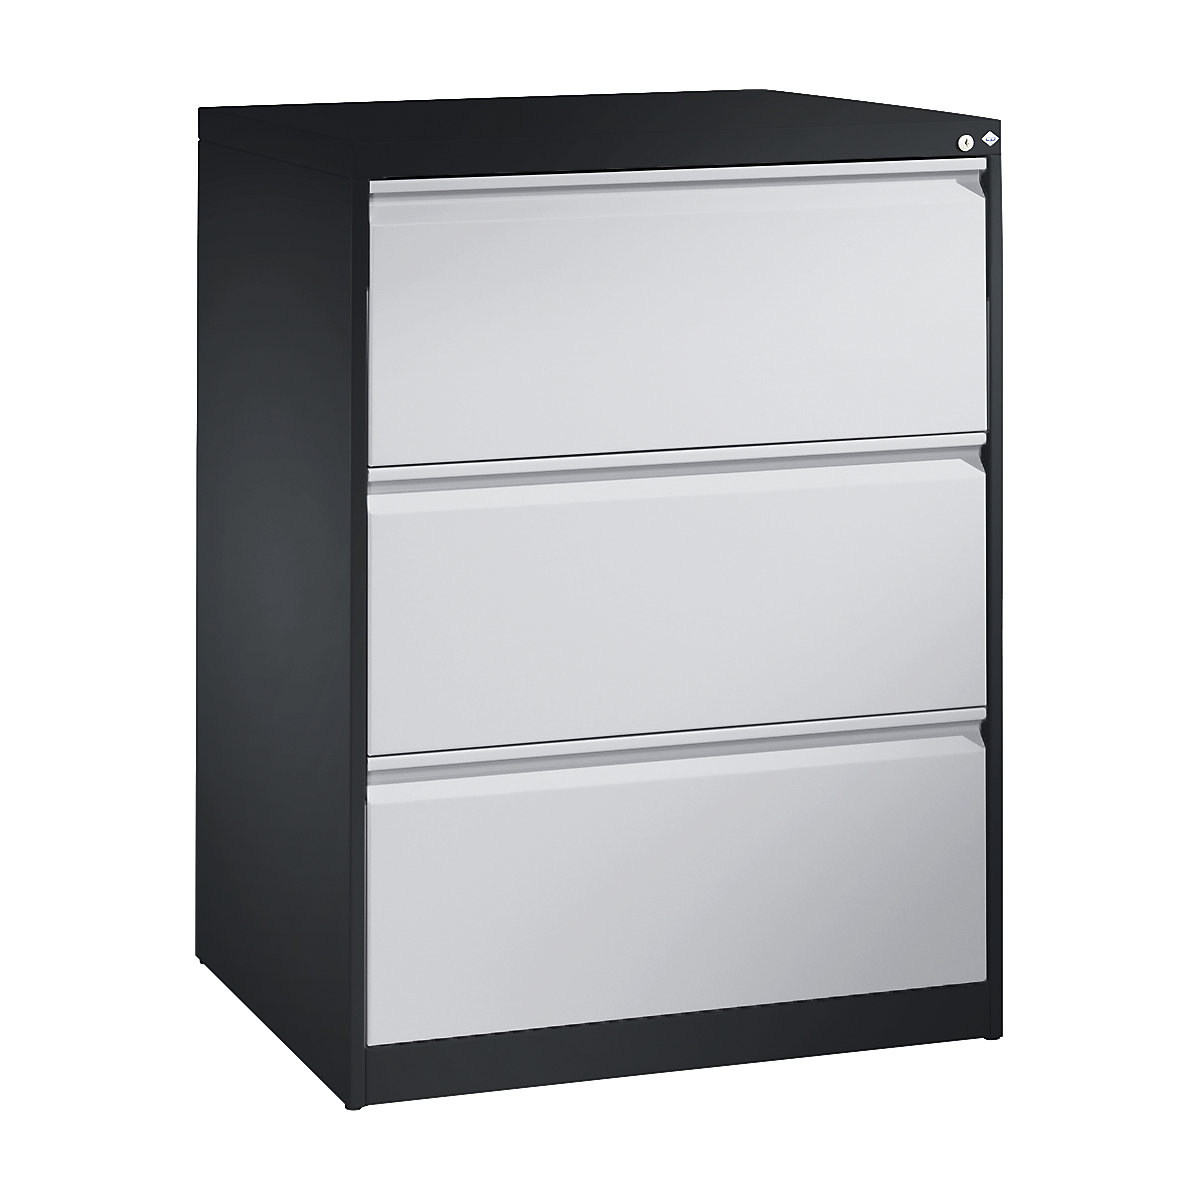 Szafka kartotekowa ACURADO – C+P, dwurzędowa, 3 szuflady, czarno-szara / białe aluminium-7